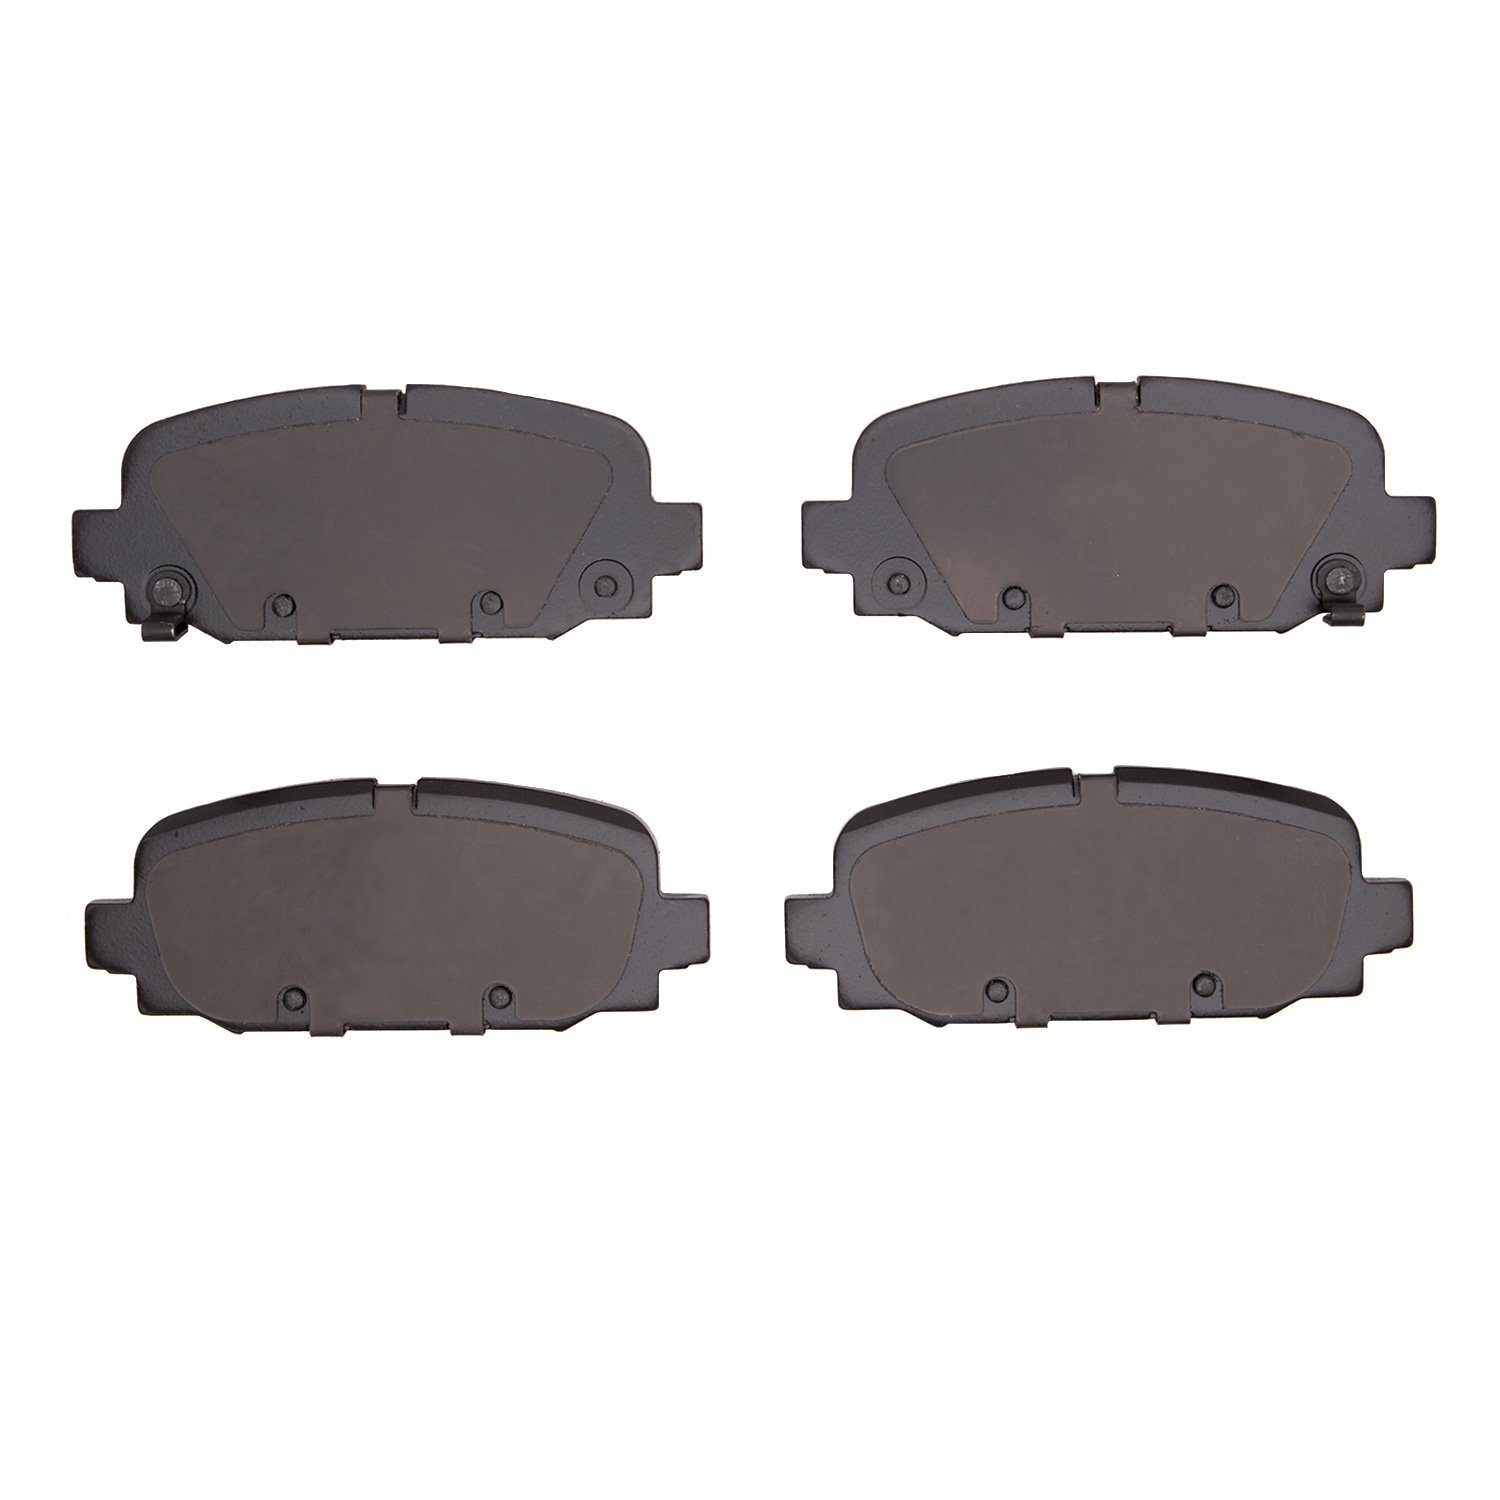 1310-2081-00 3000-Series Ceramic Brake Pads, Fits Select Mopar, Position: Rear